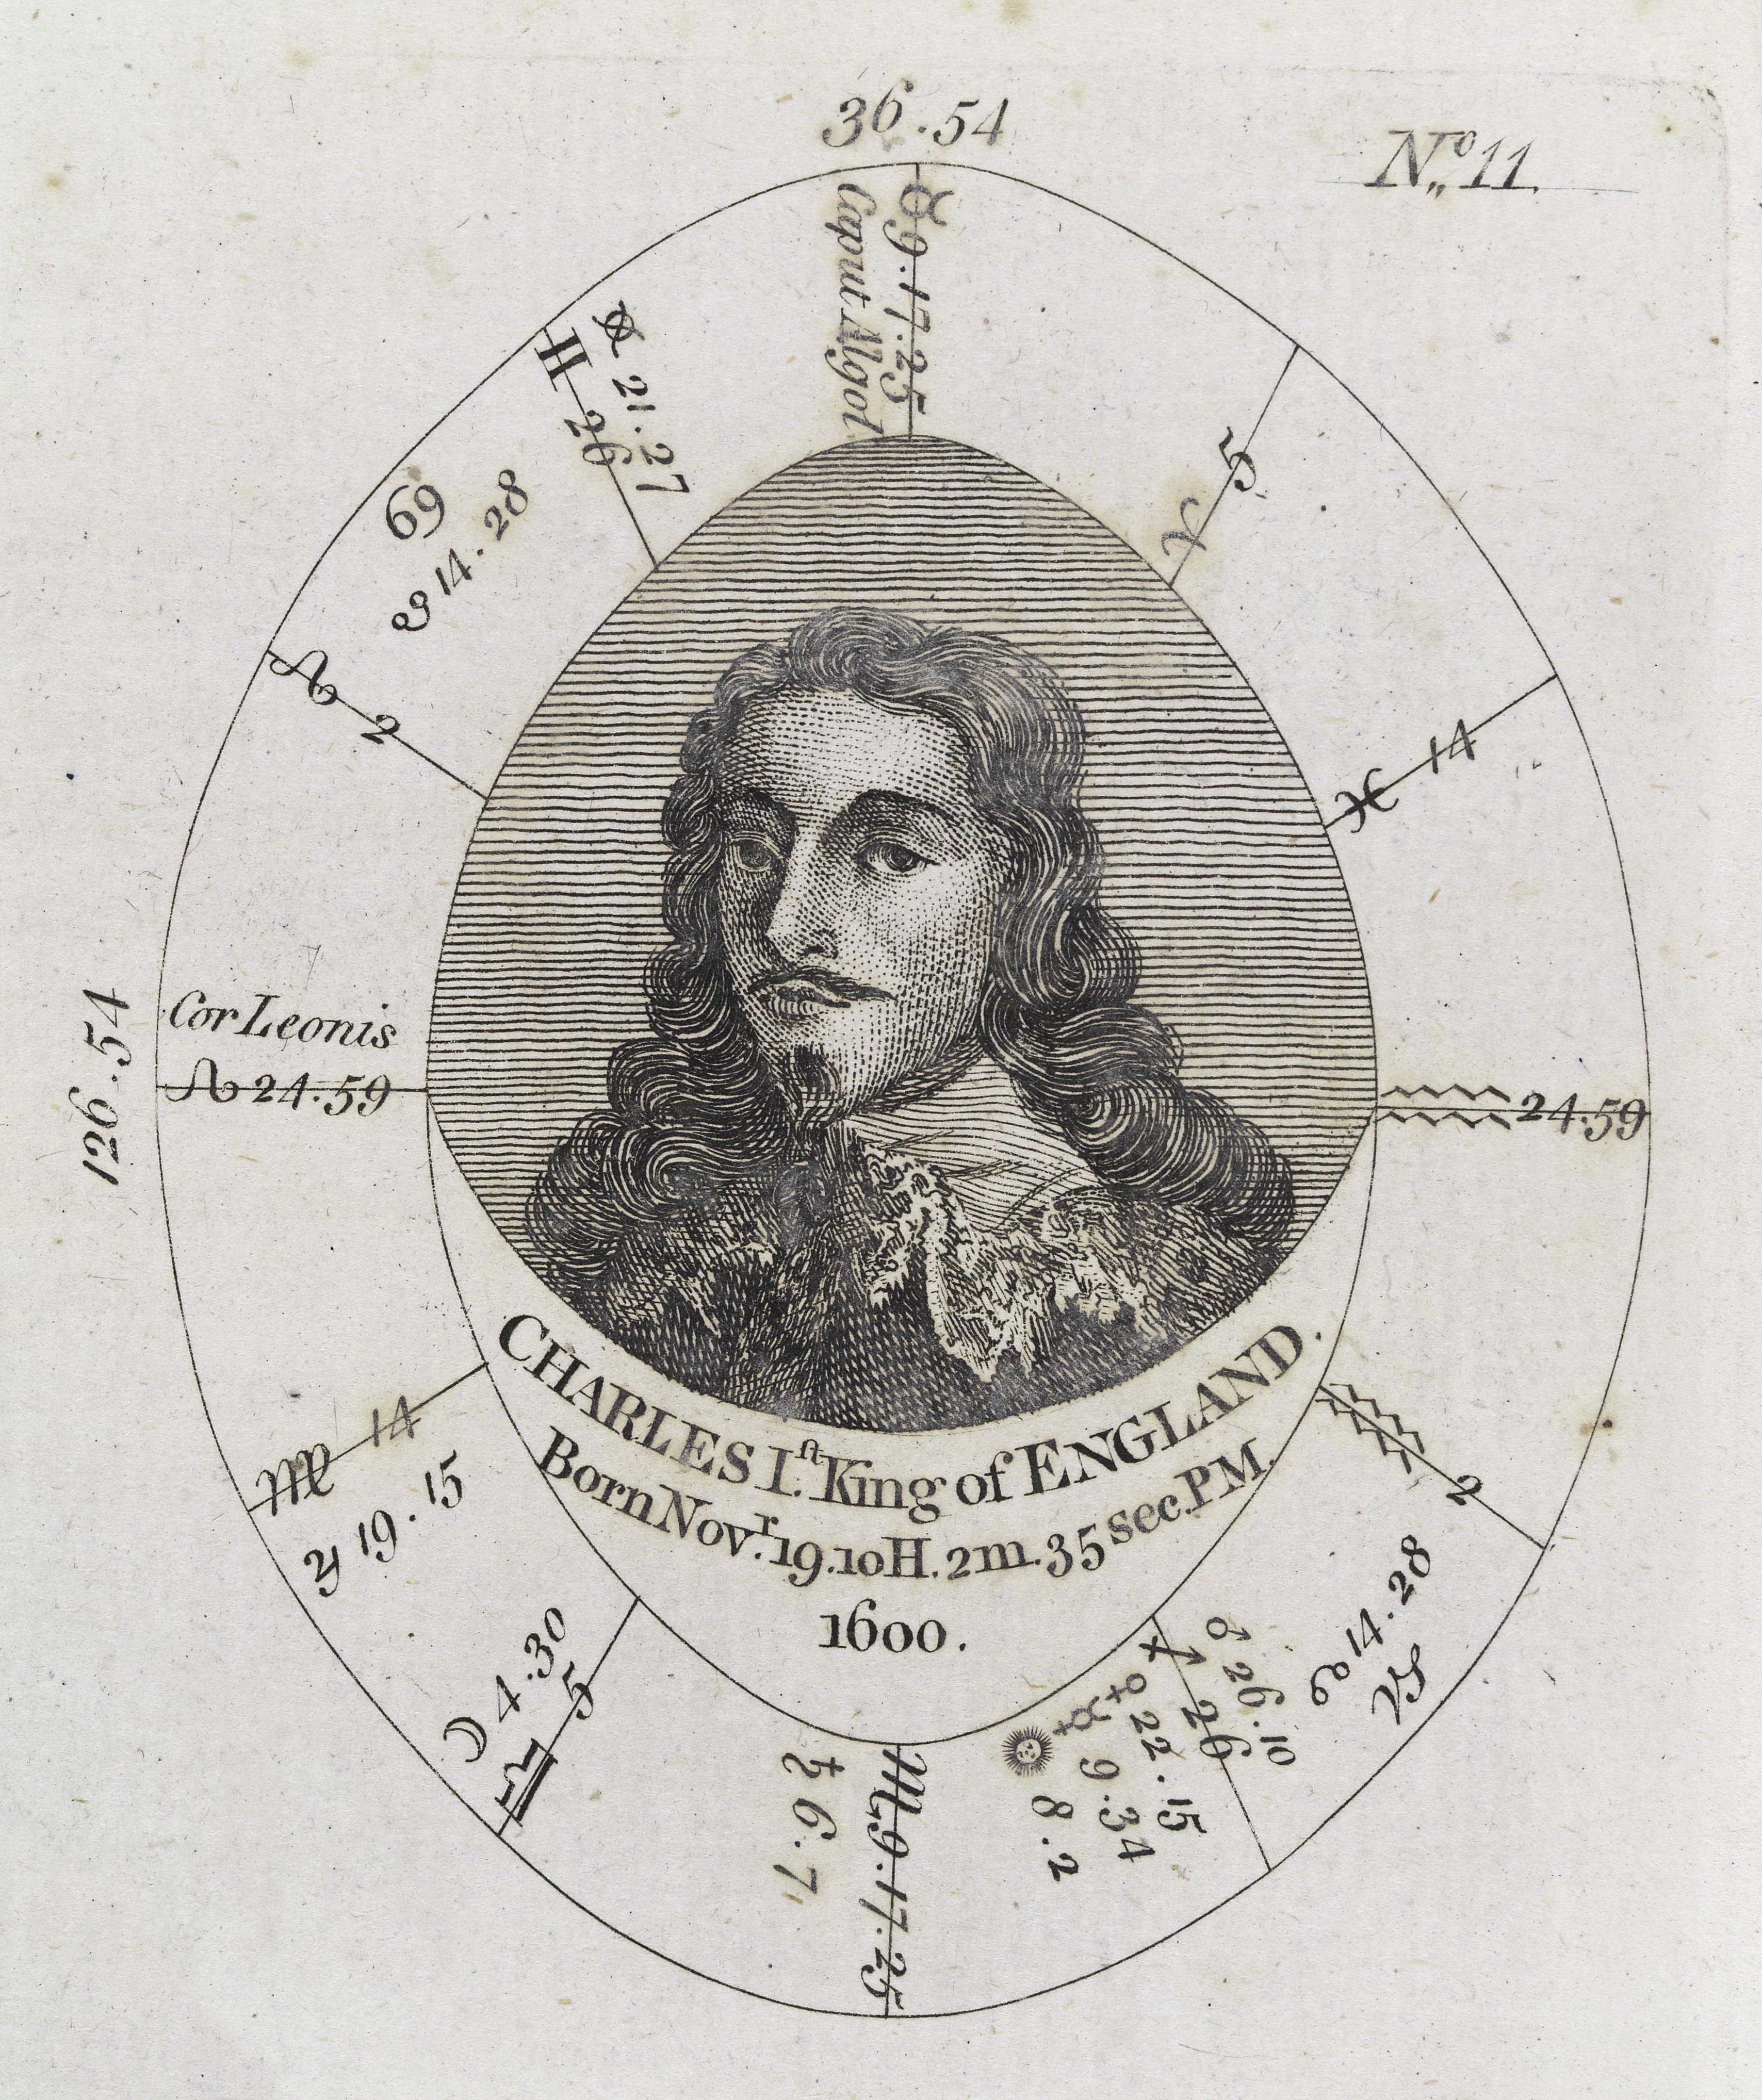 Charles I of England - Wikipedia